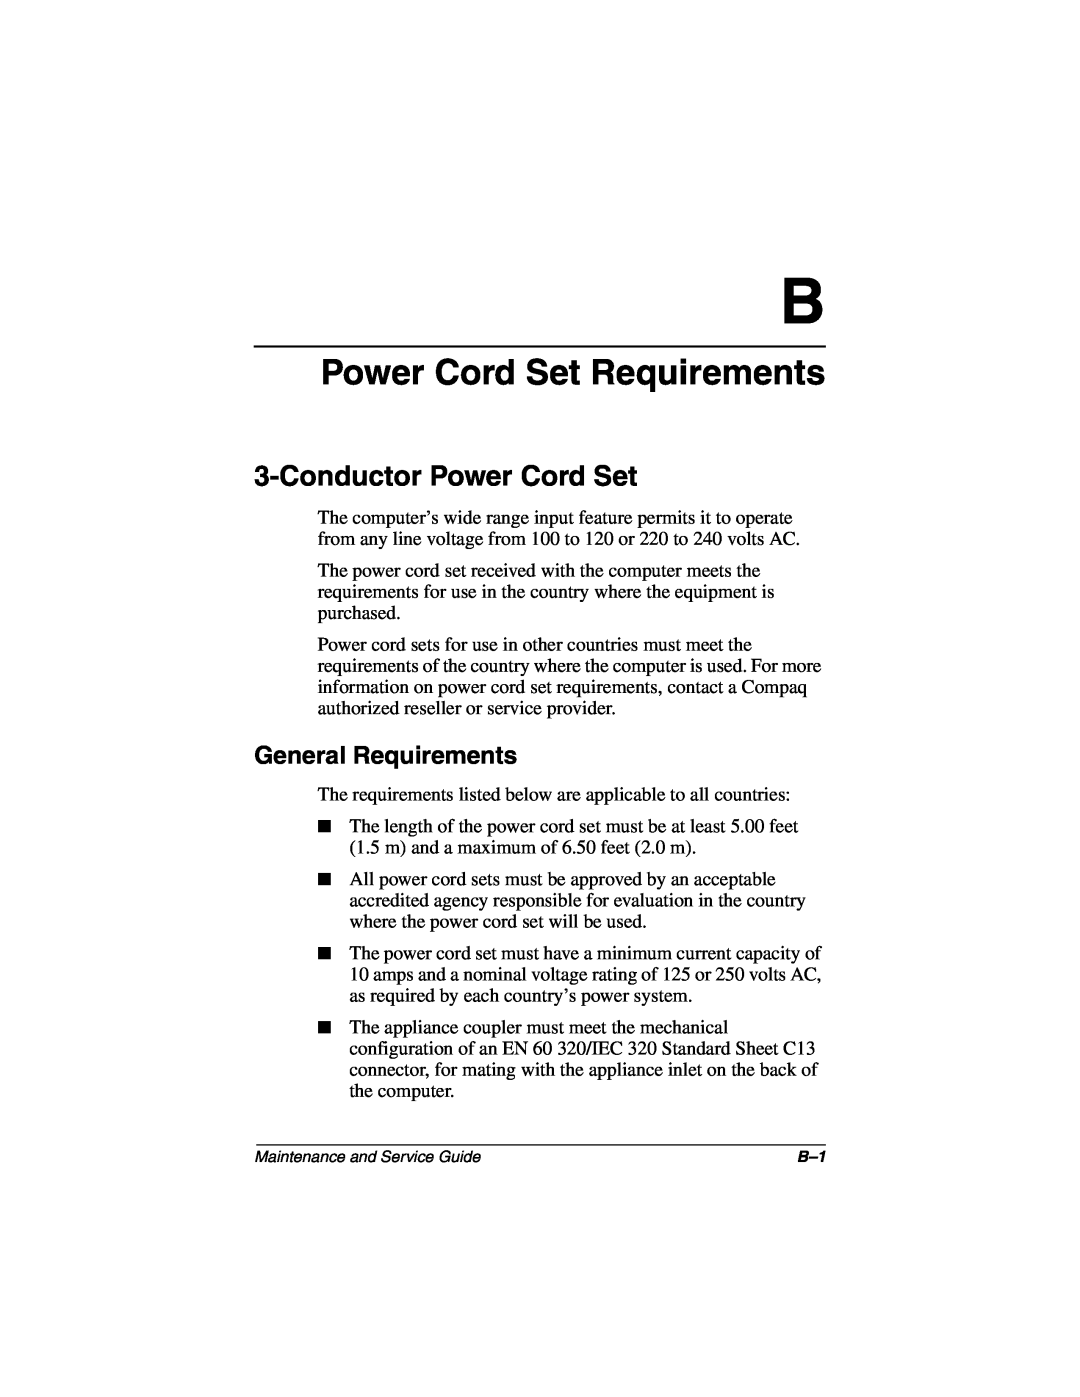 Compaq N160 manual Power Cord Set Requirements, Conductor Power Cord Set, General Requirements 